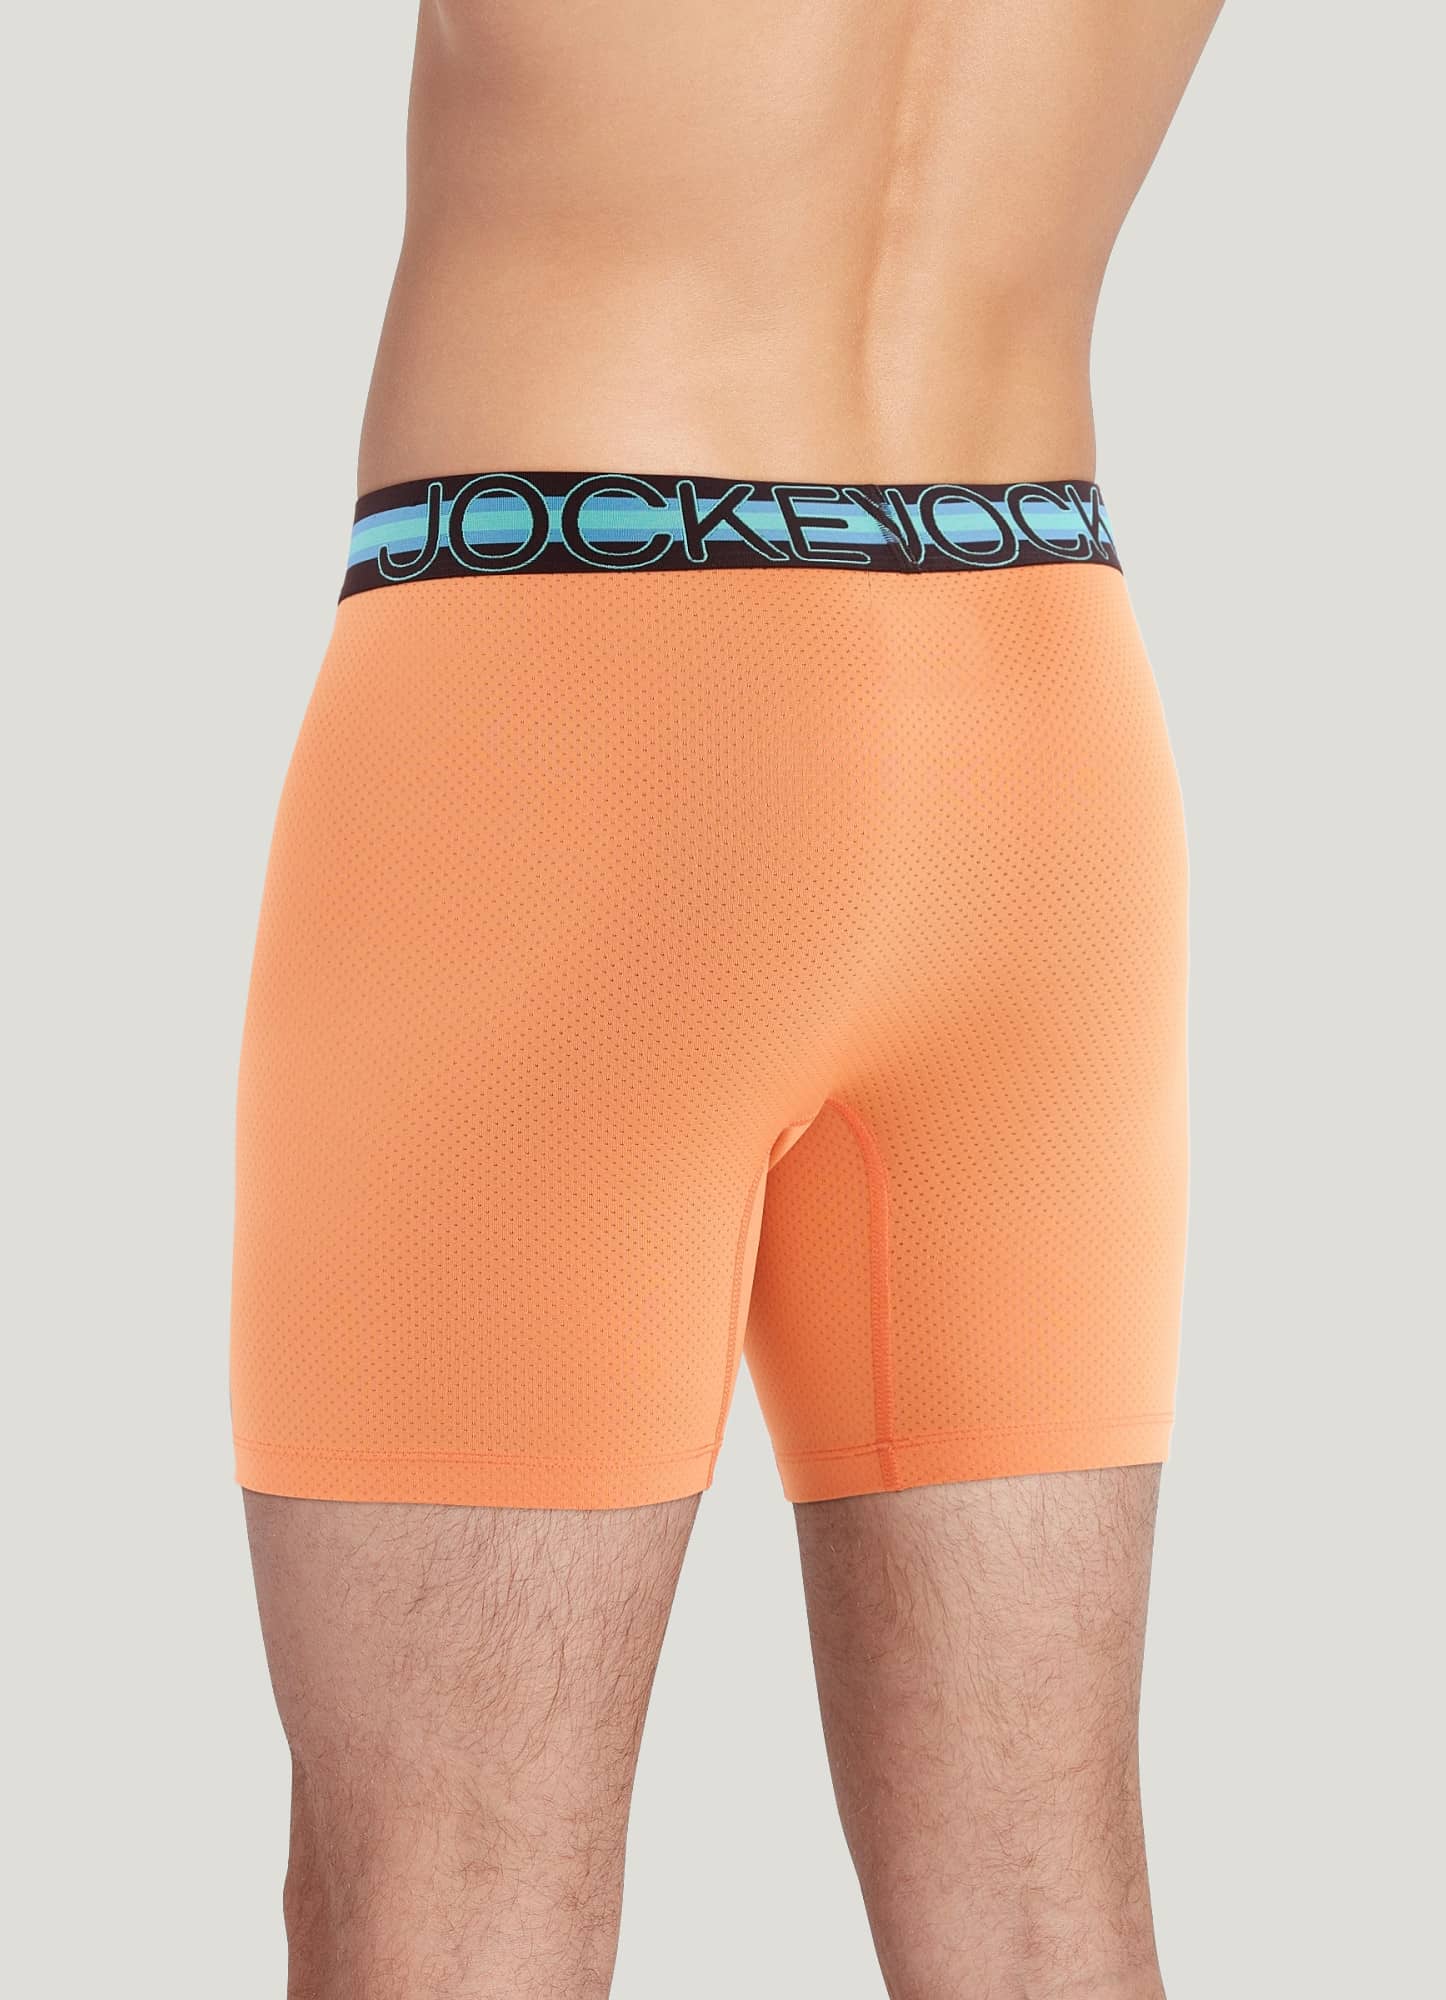 AND1 Men's Underwear – Long Leg Performance Compression Boxer Briefs (12  Pack)